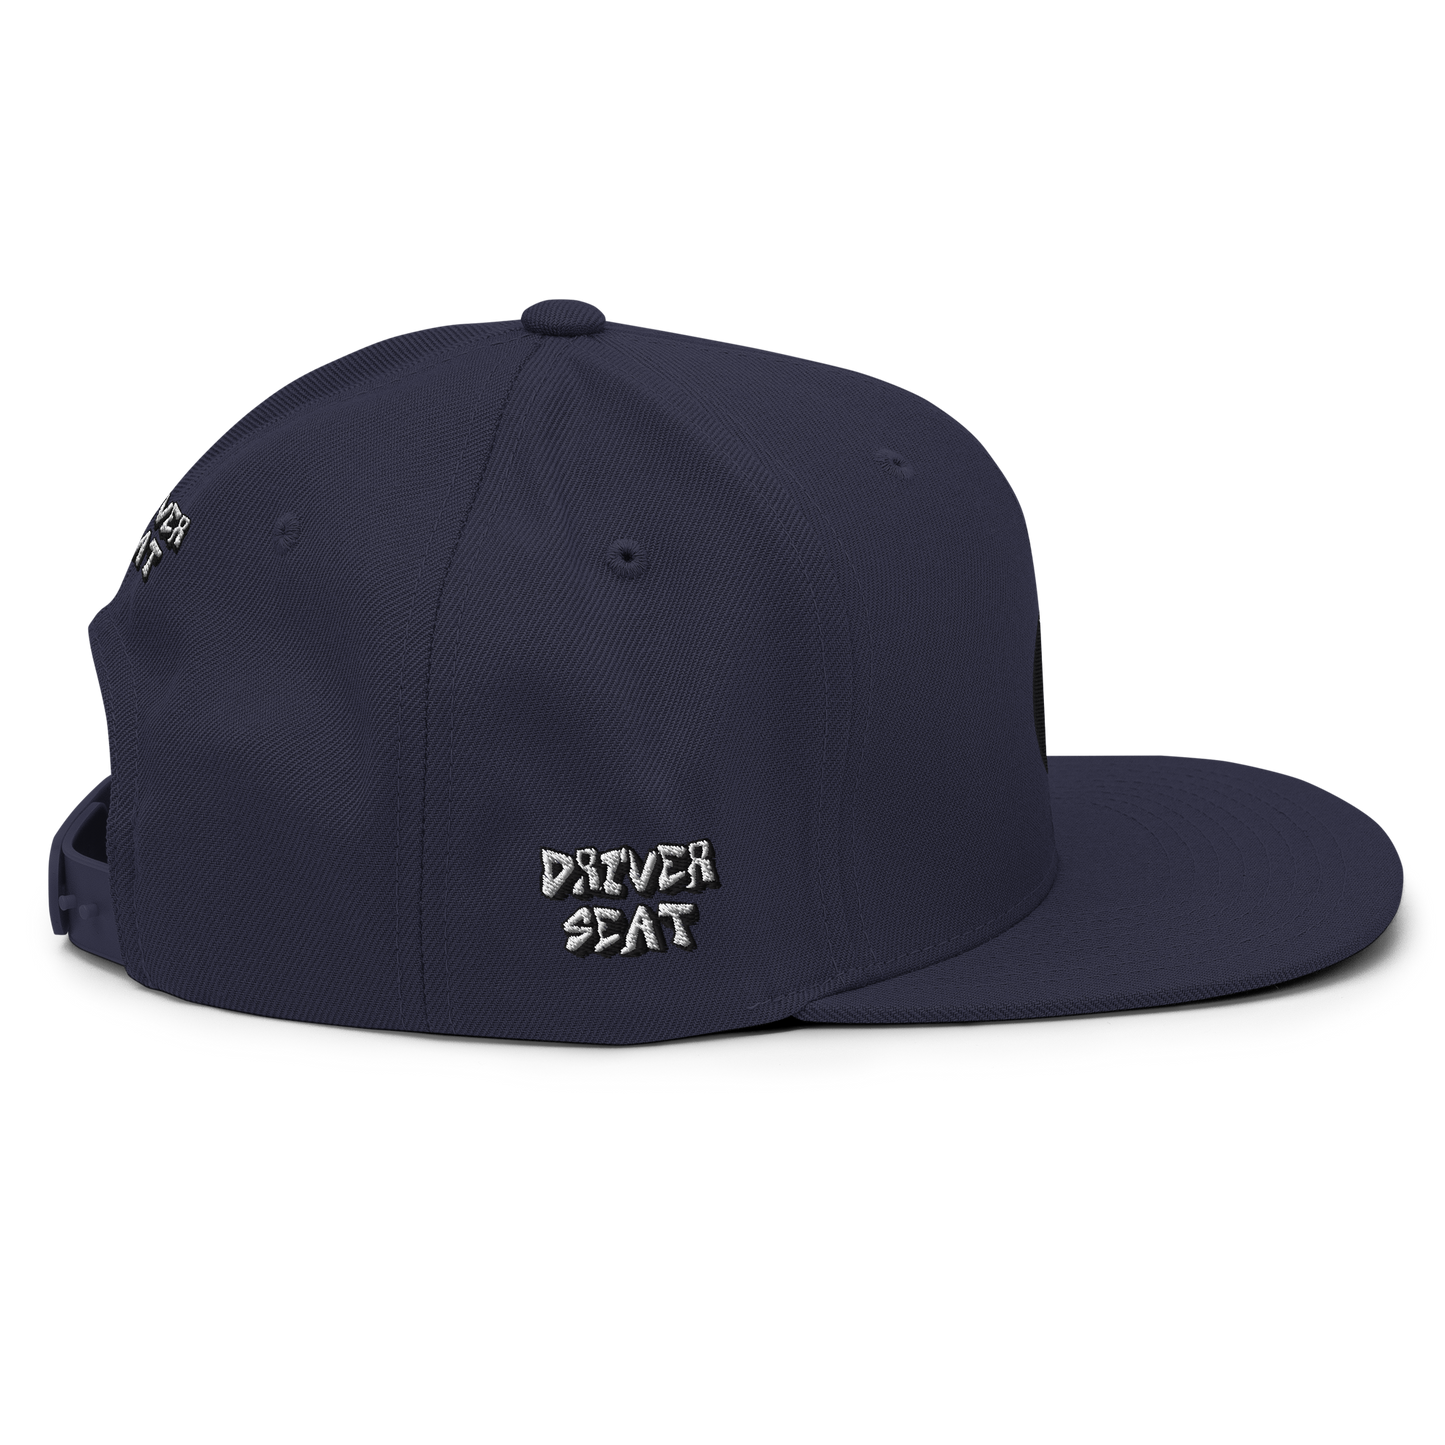 NBD Bimmer Hat Snapback - Navy